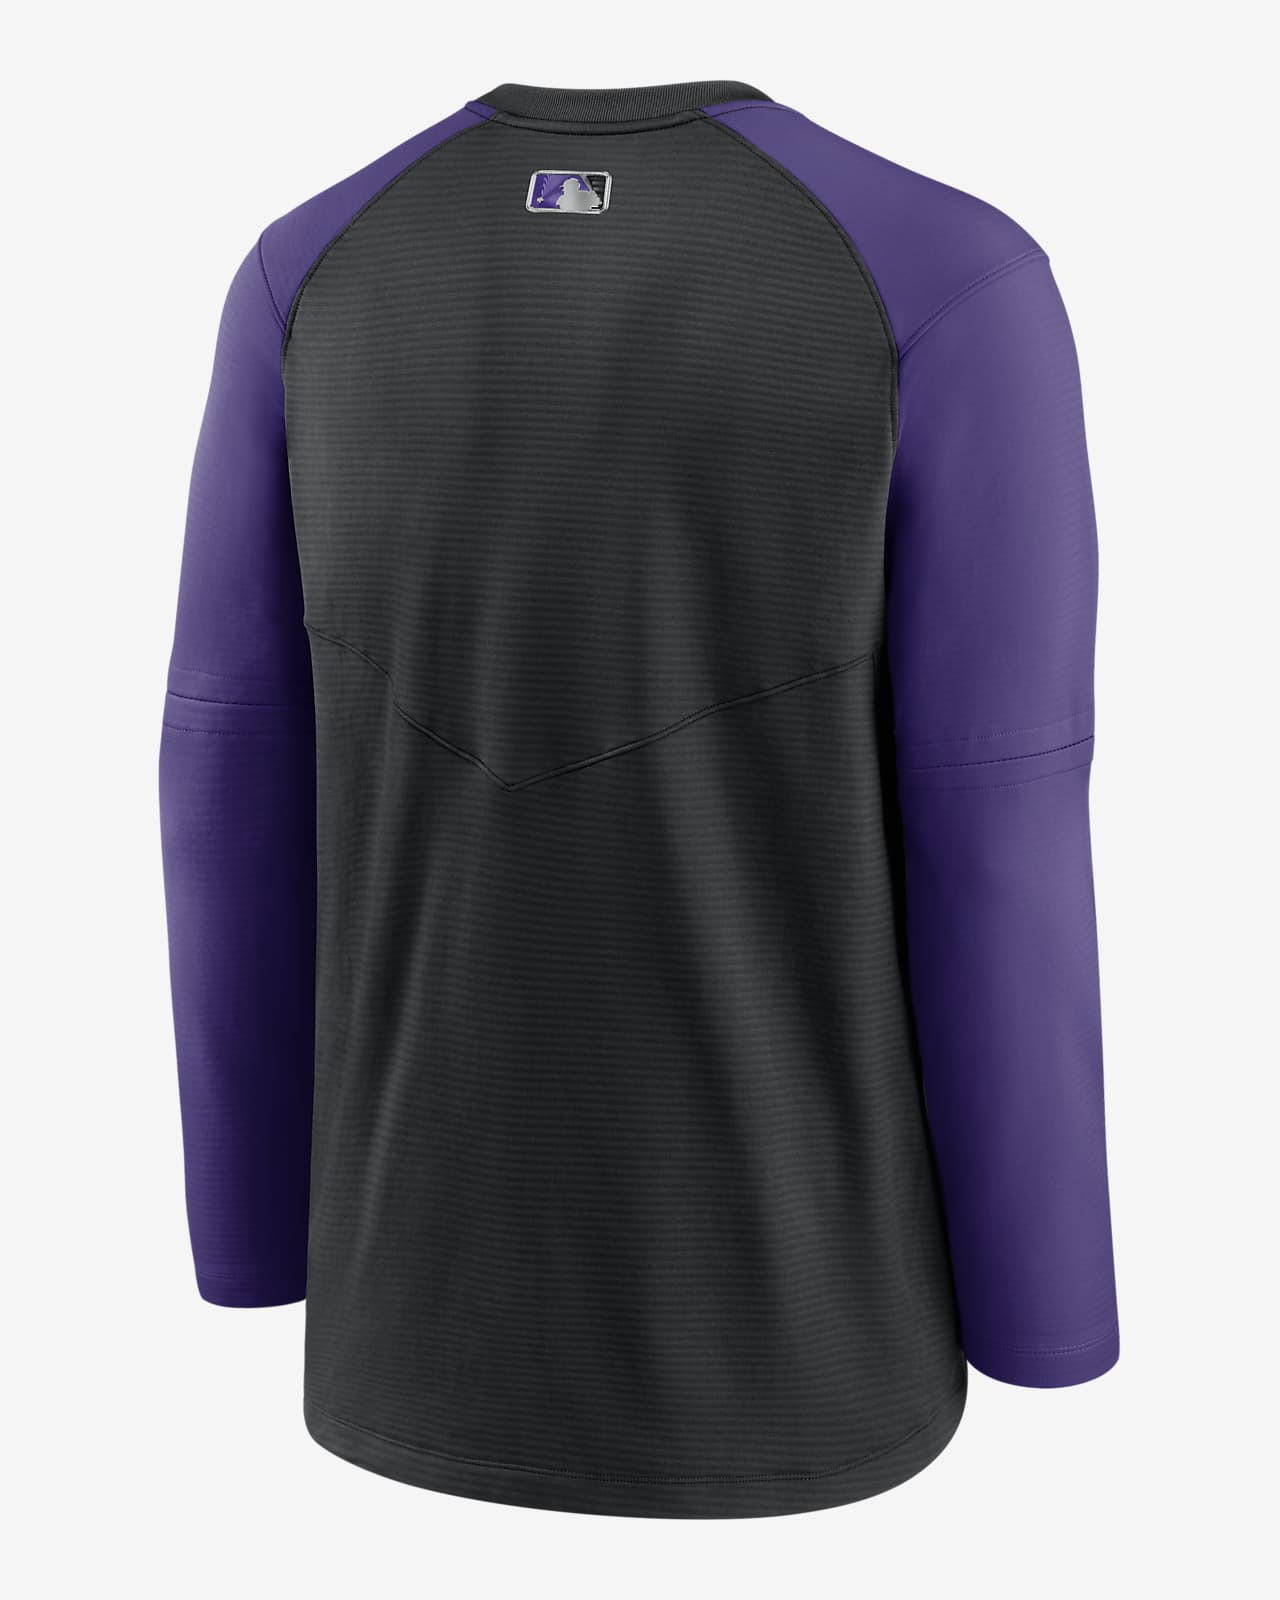 Nike Dri-FIT Logo Legend (MLB Colorado Rockies) Men's T-Shirt.